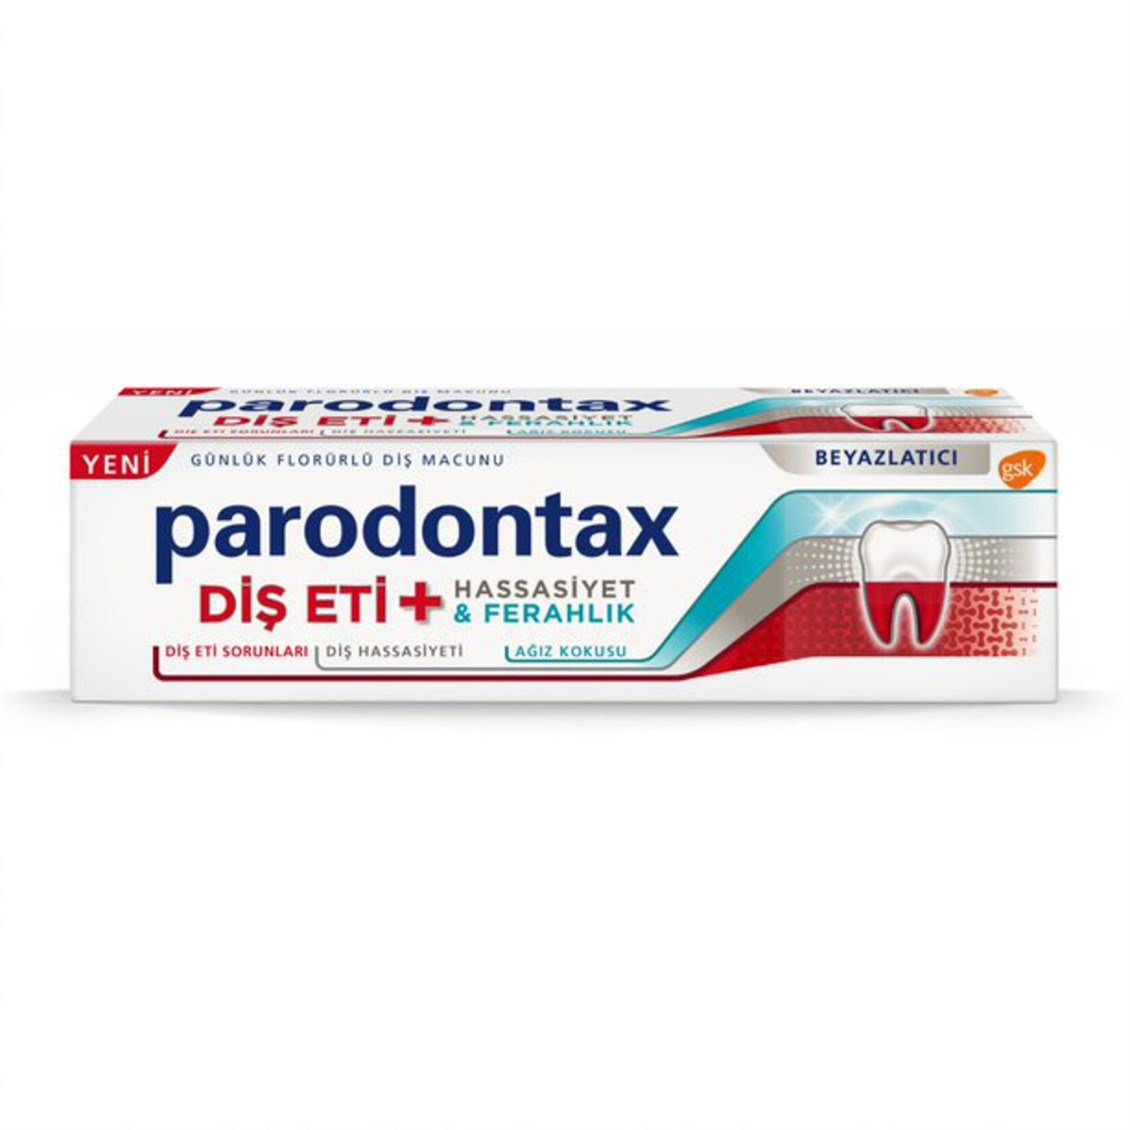 Parodontax Diş Macunu Diş Eti + Hassas Beyaz 75 ml - Onur Market